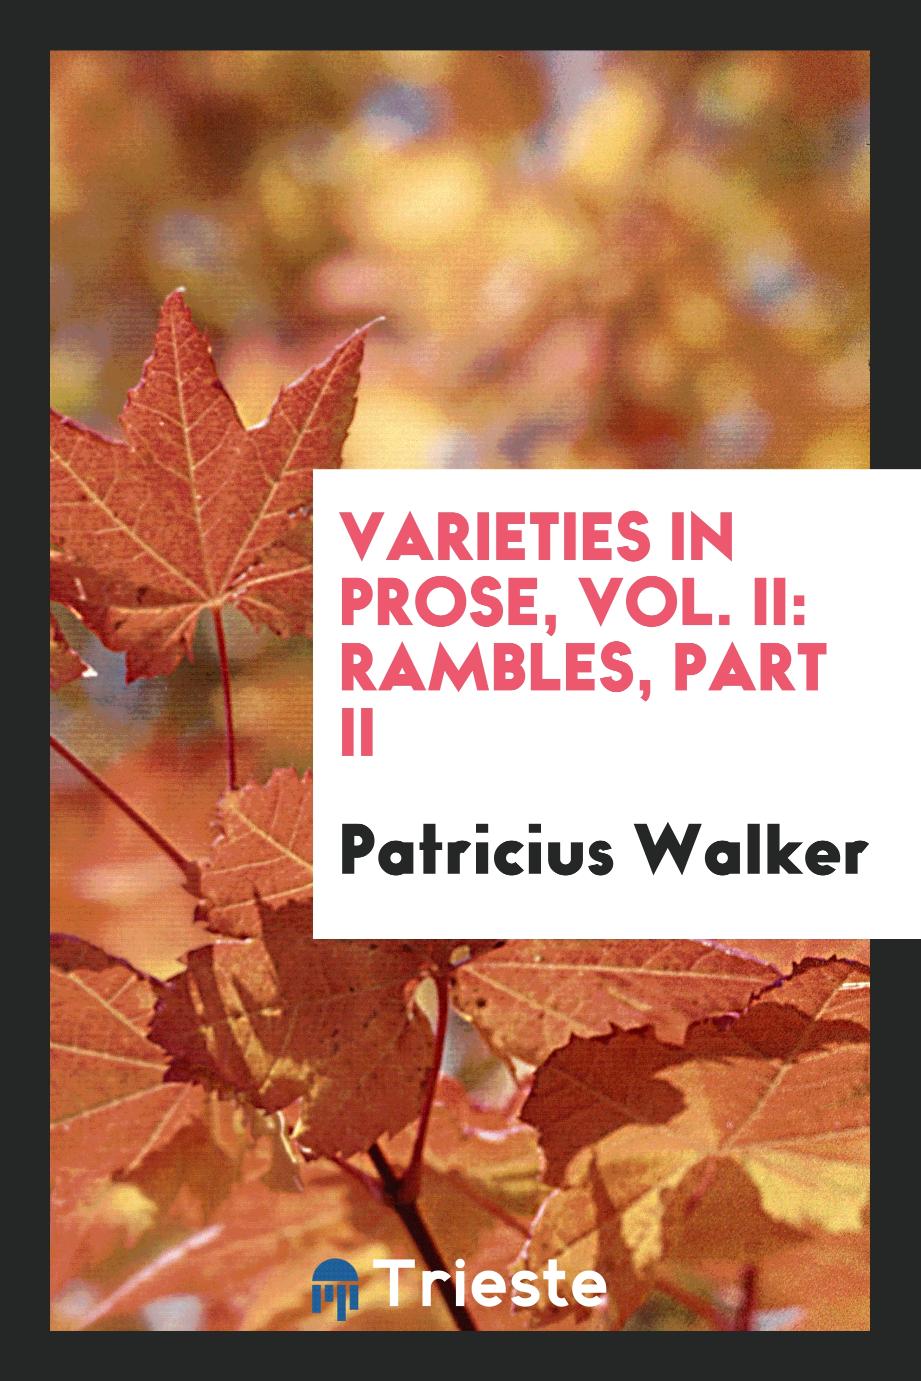 Varieties in prose, Vol. II: Rambles, Part II